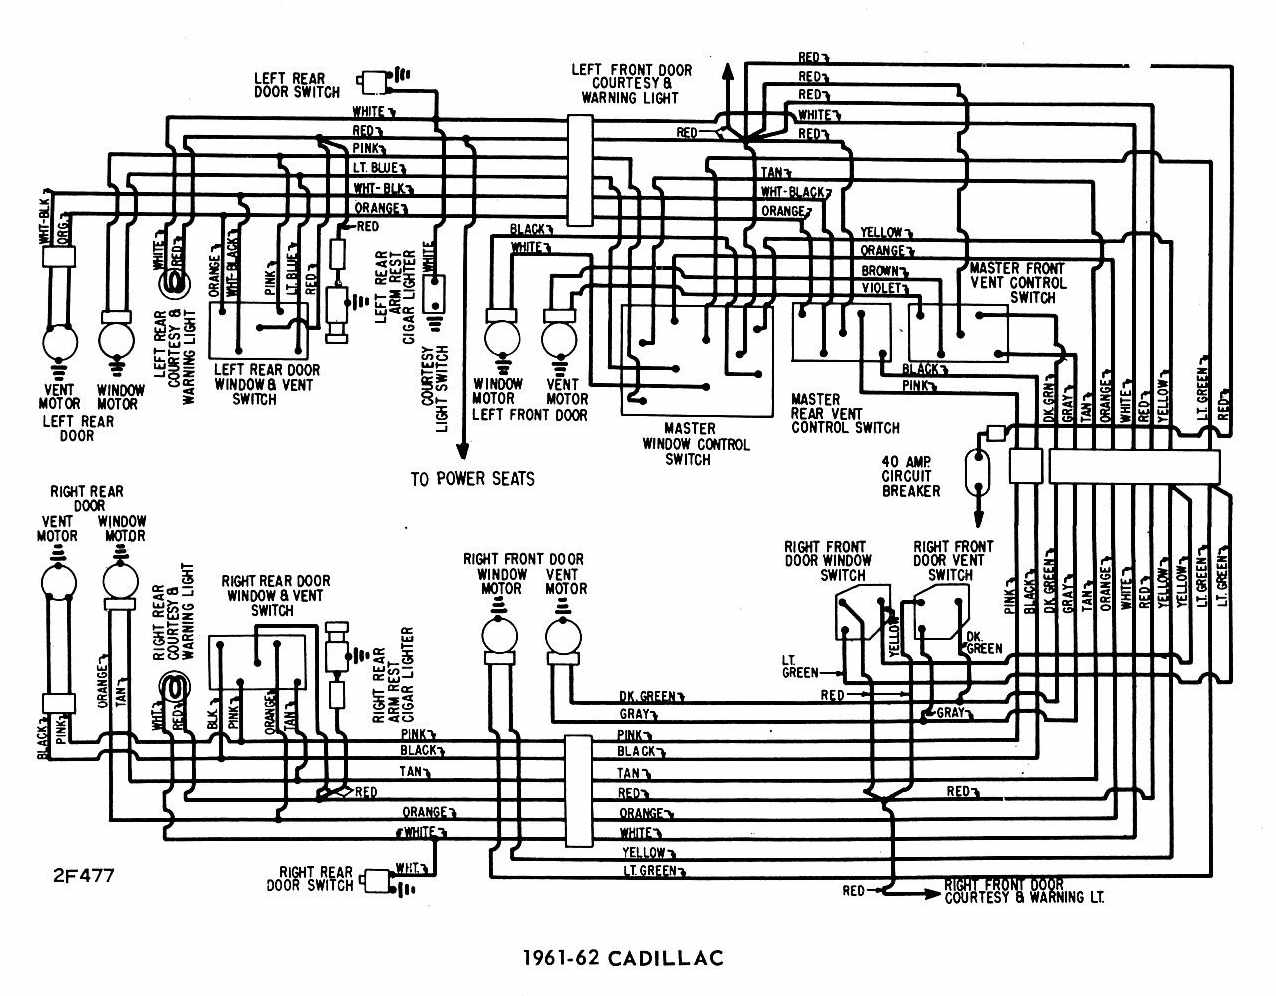 CADILLAC - Car PDF Manual, Wiring Diagram & Fault Codes DTC 1999 Cadillac DeVille Starter Location CAR PDF Manuals & Fault Codes DTC